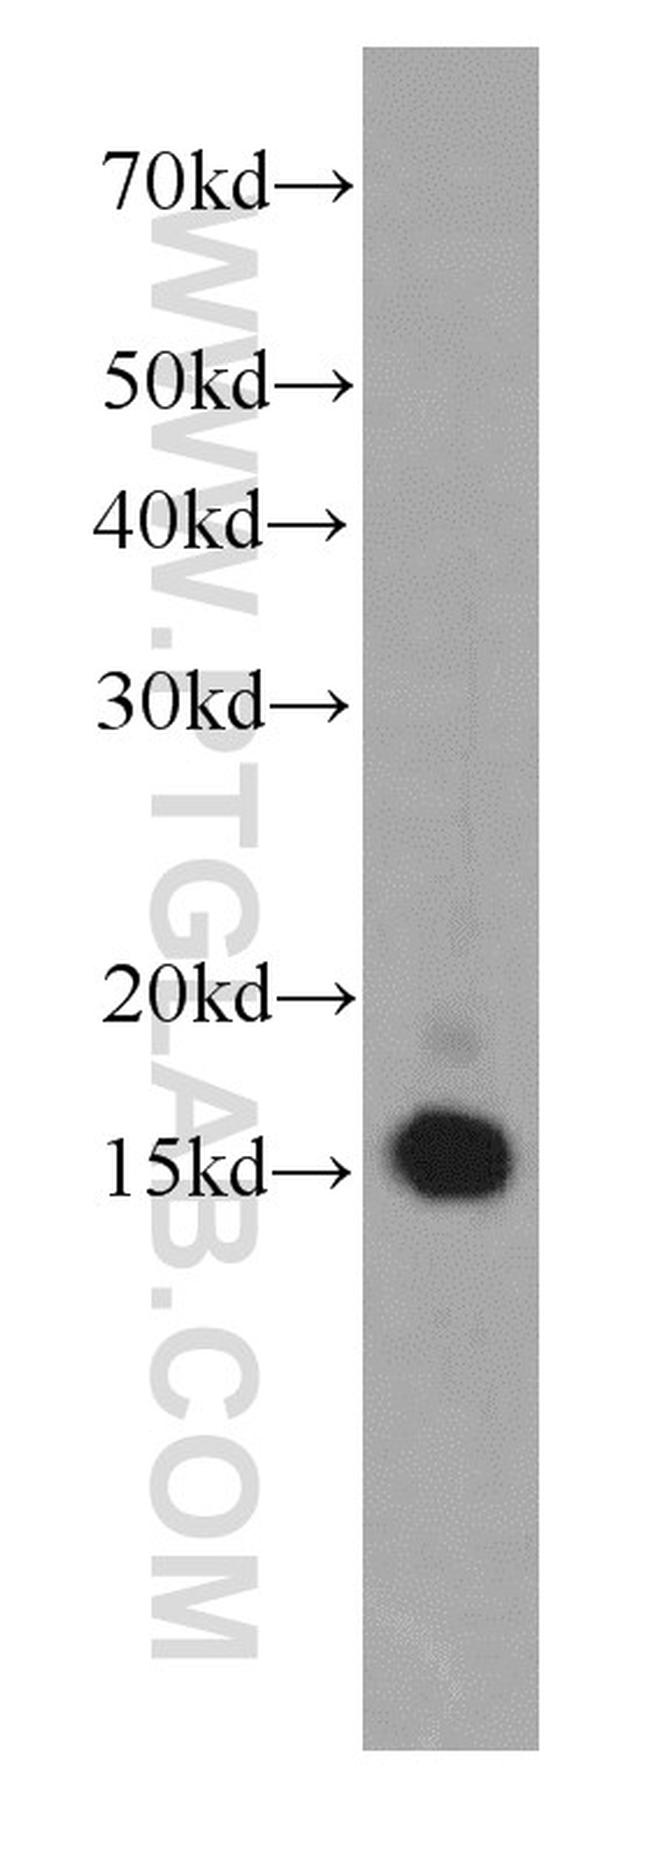 SNRPD2 Antibody in Western Blot (WB)